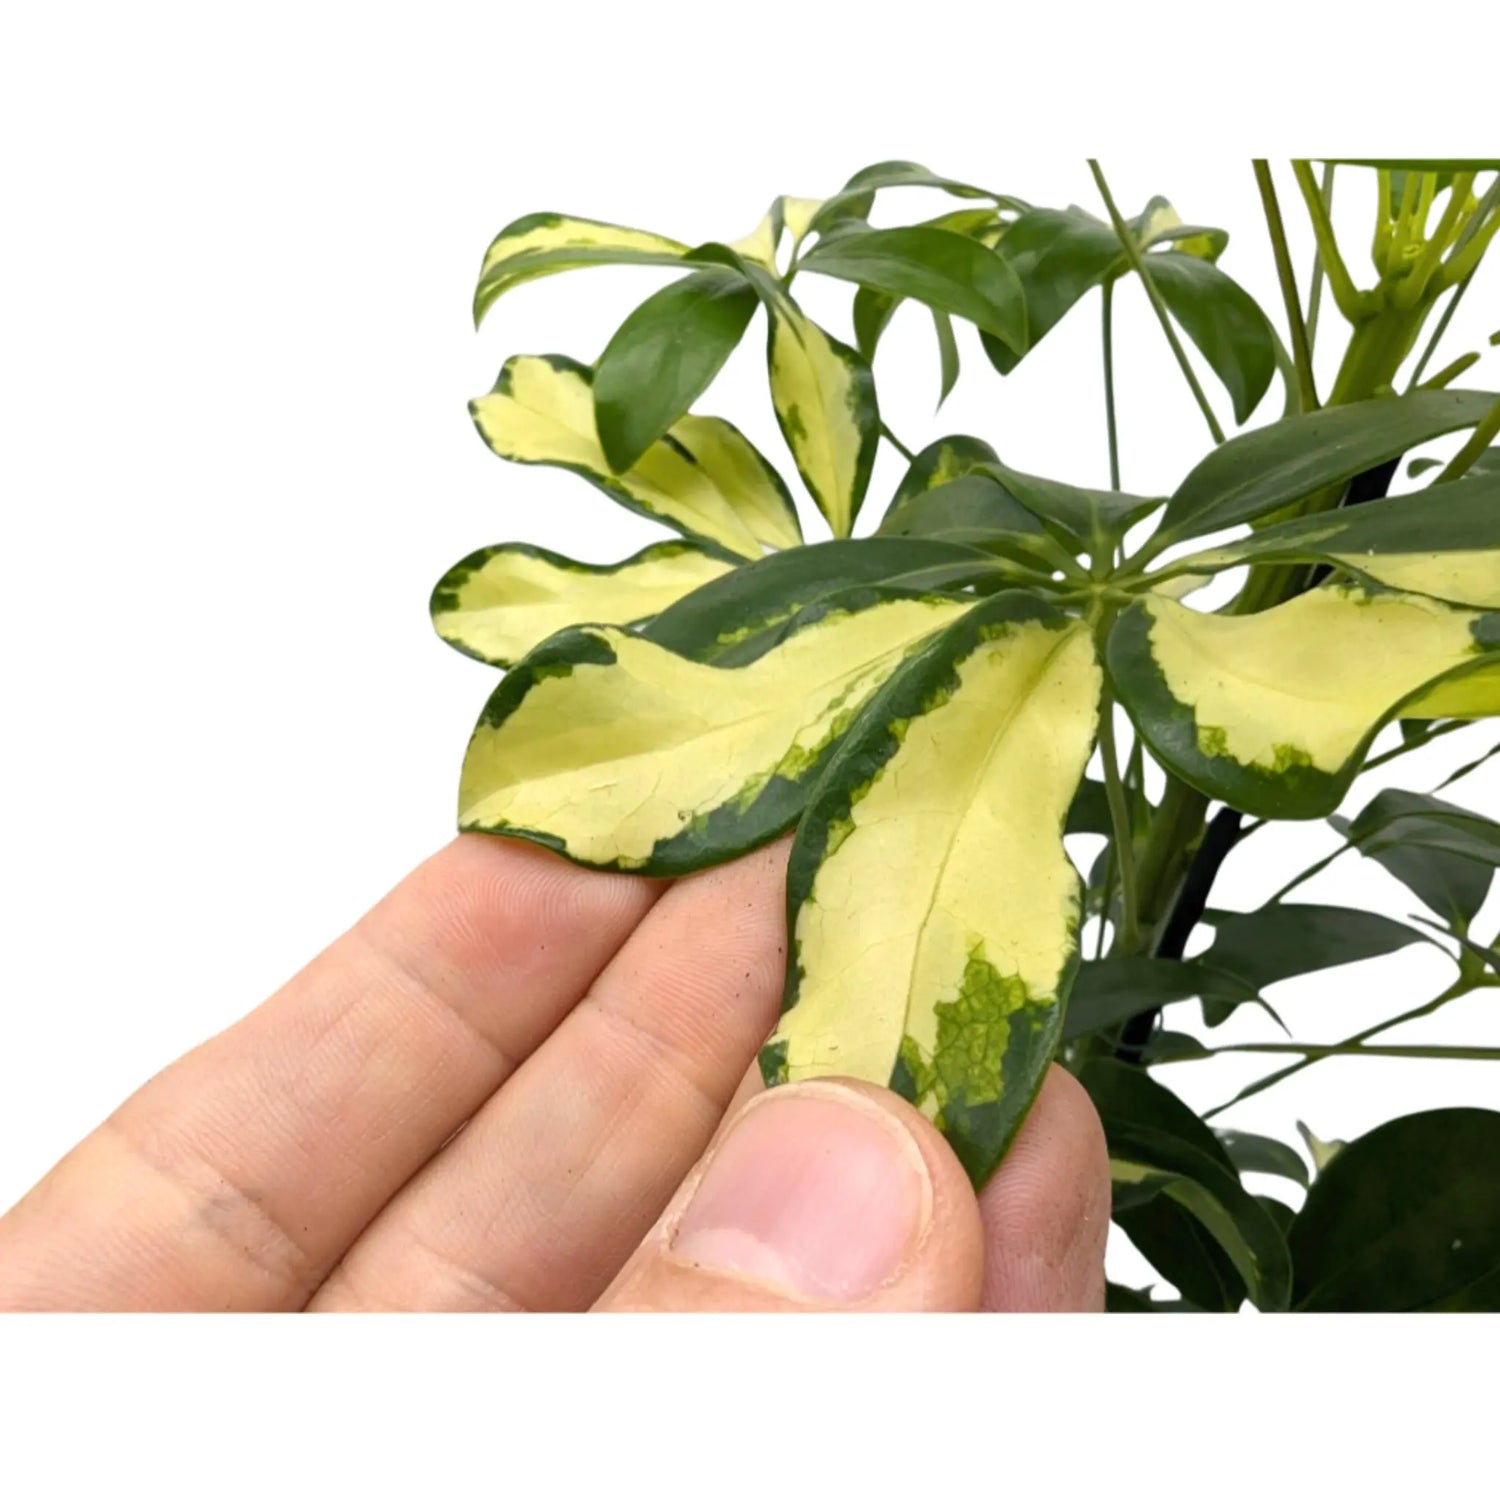 Schefflera arboricola Varieagated- Umbrella Tree Leaf Culture